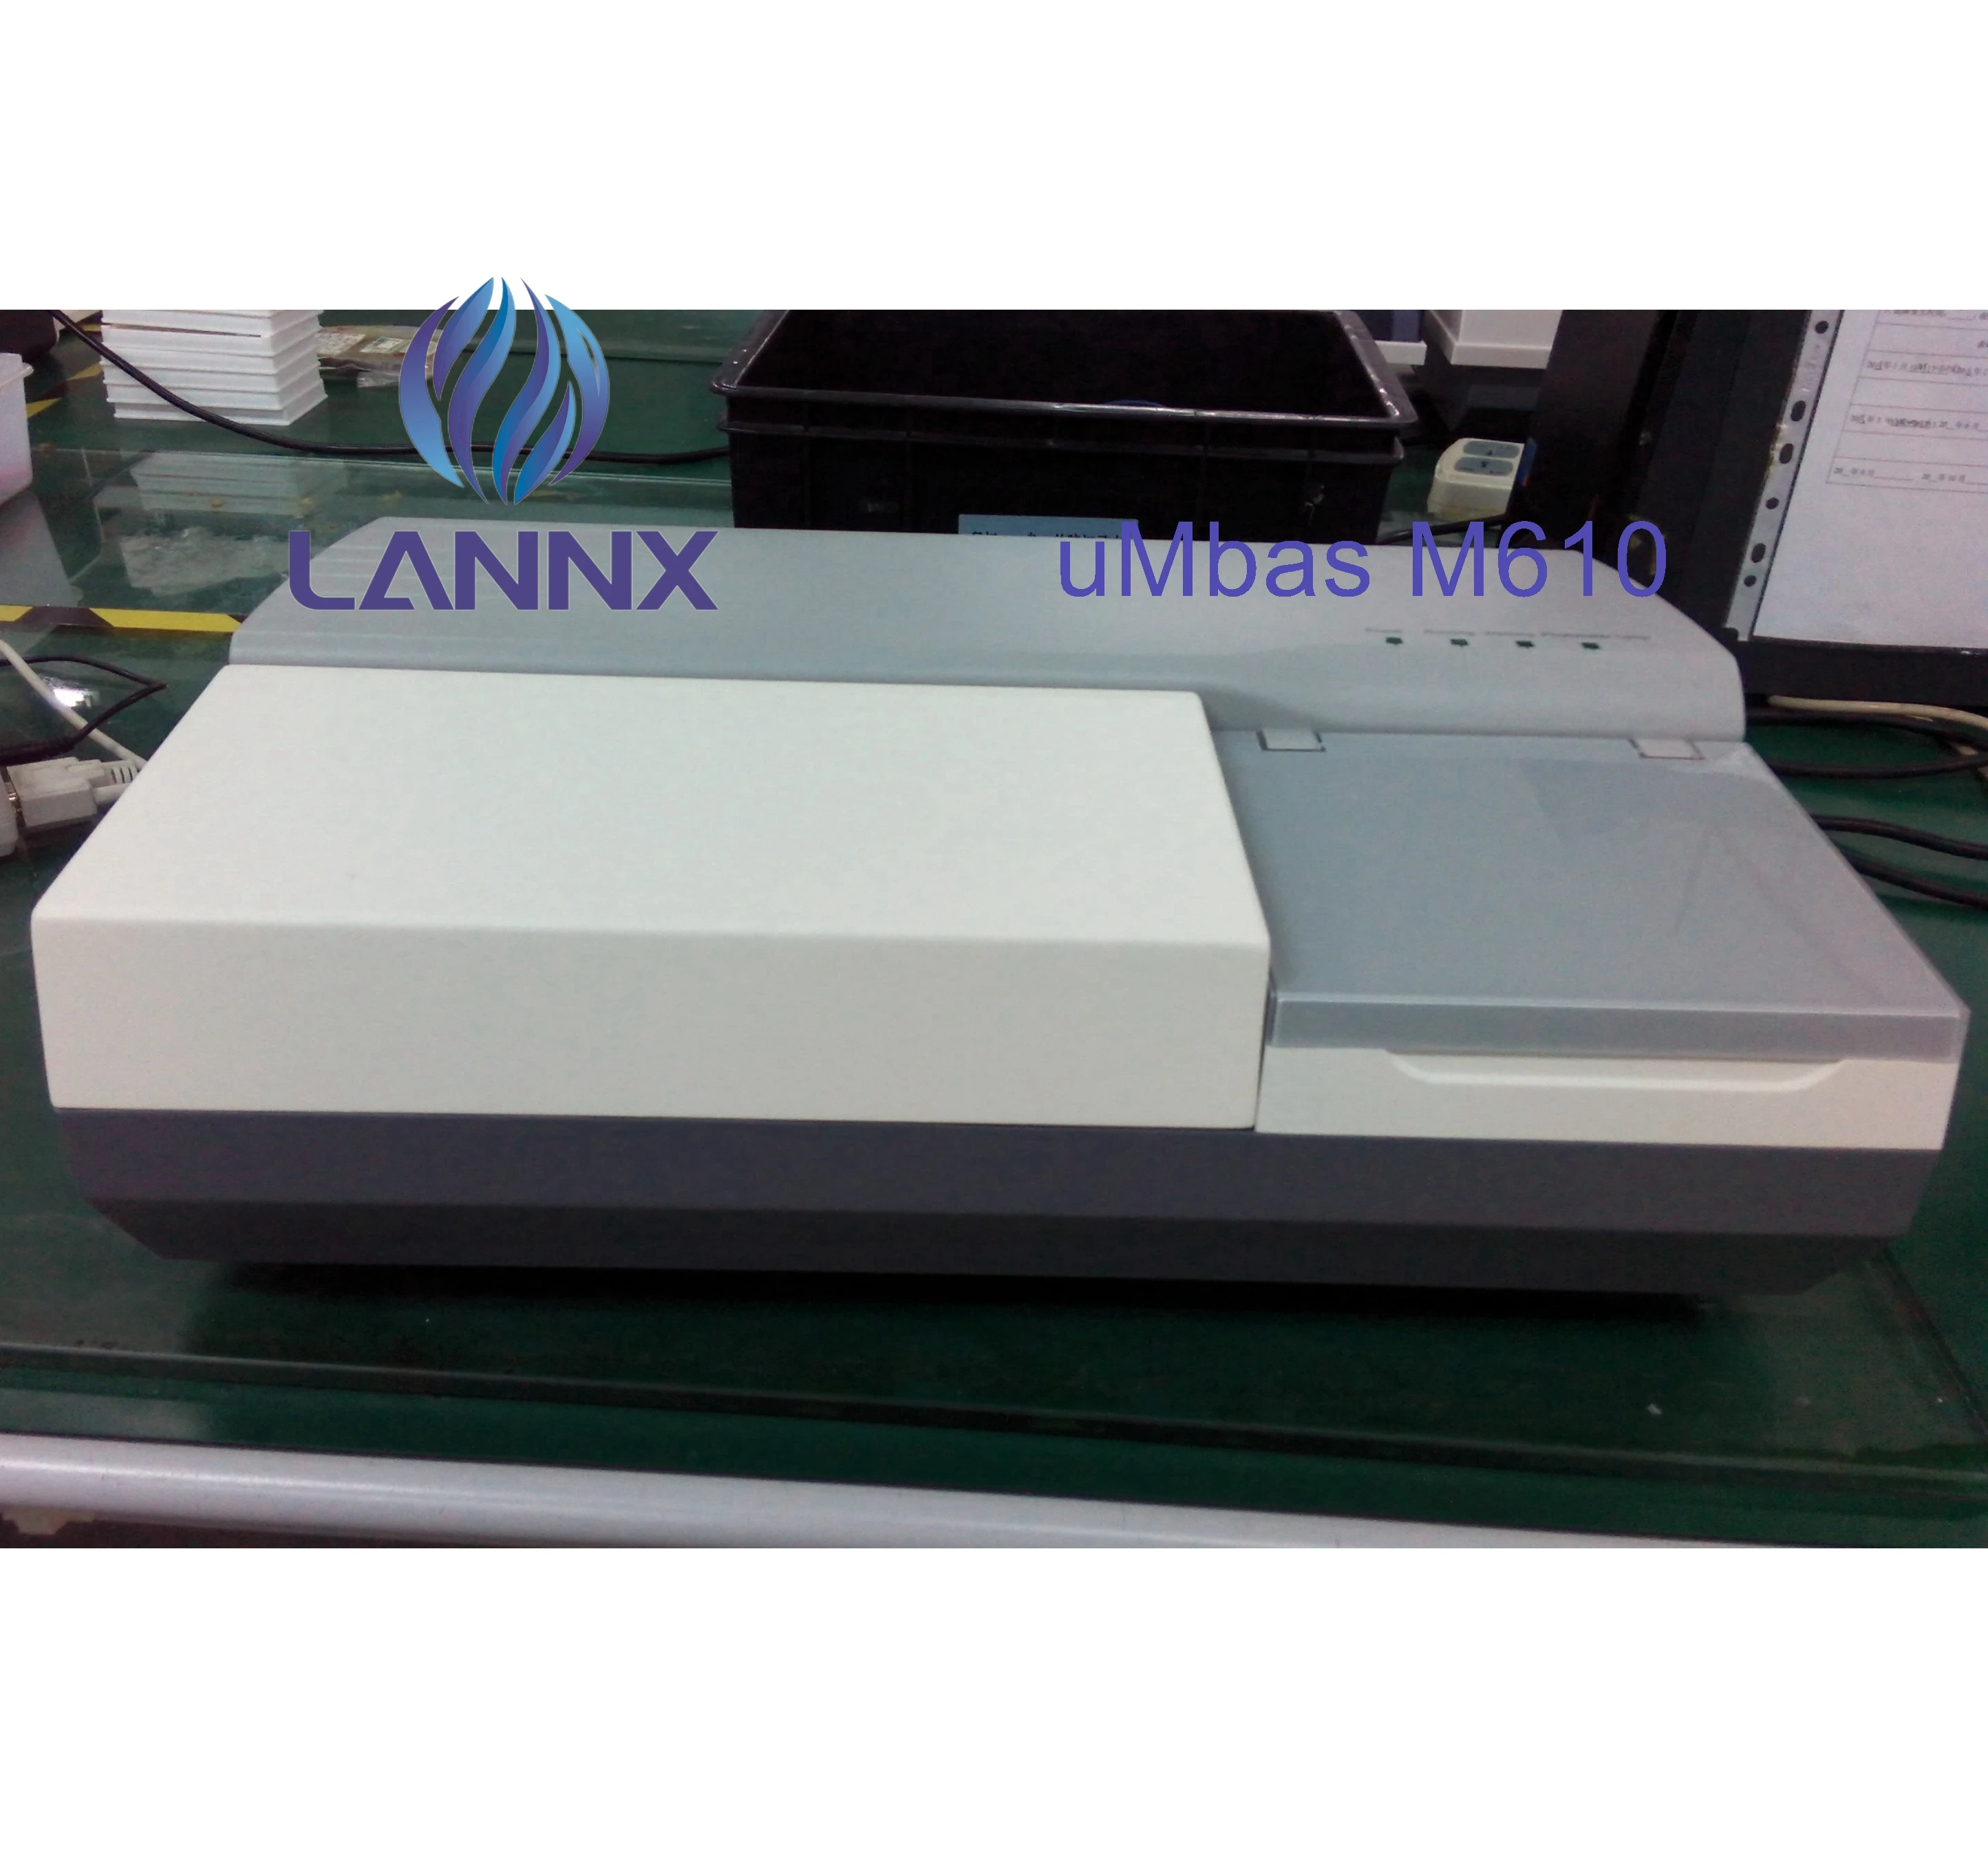 

Lannx uMbas M610 new poct machine immunoassay chemistry analyzer Hospital chemiluminescence fluorescence analyzer immunoassay